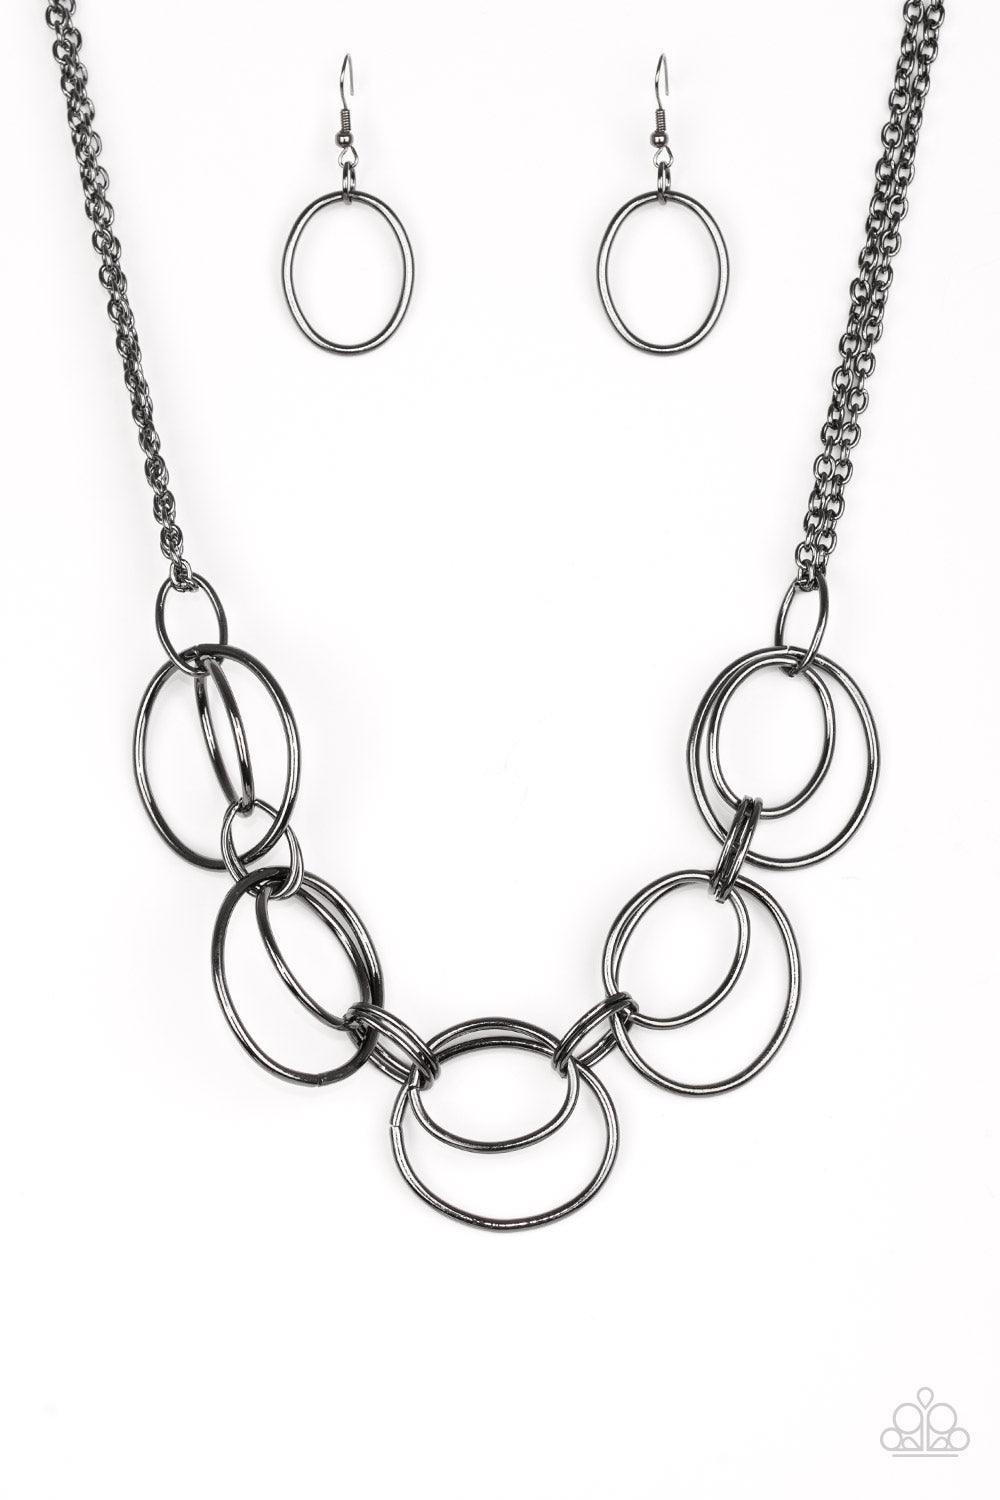 Urban Orbit Black Necklace - Jewelry by Bretta